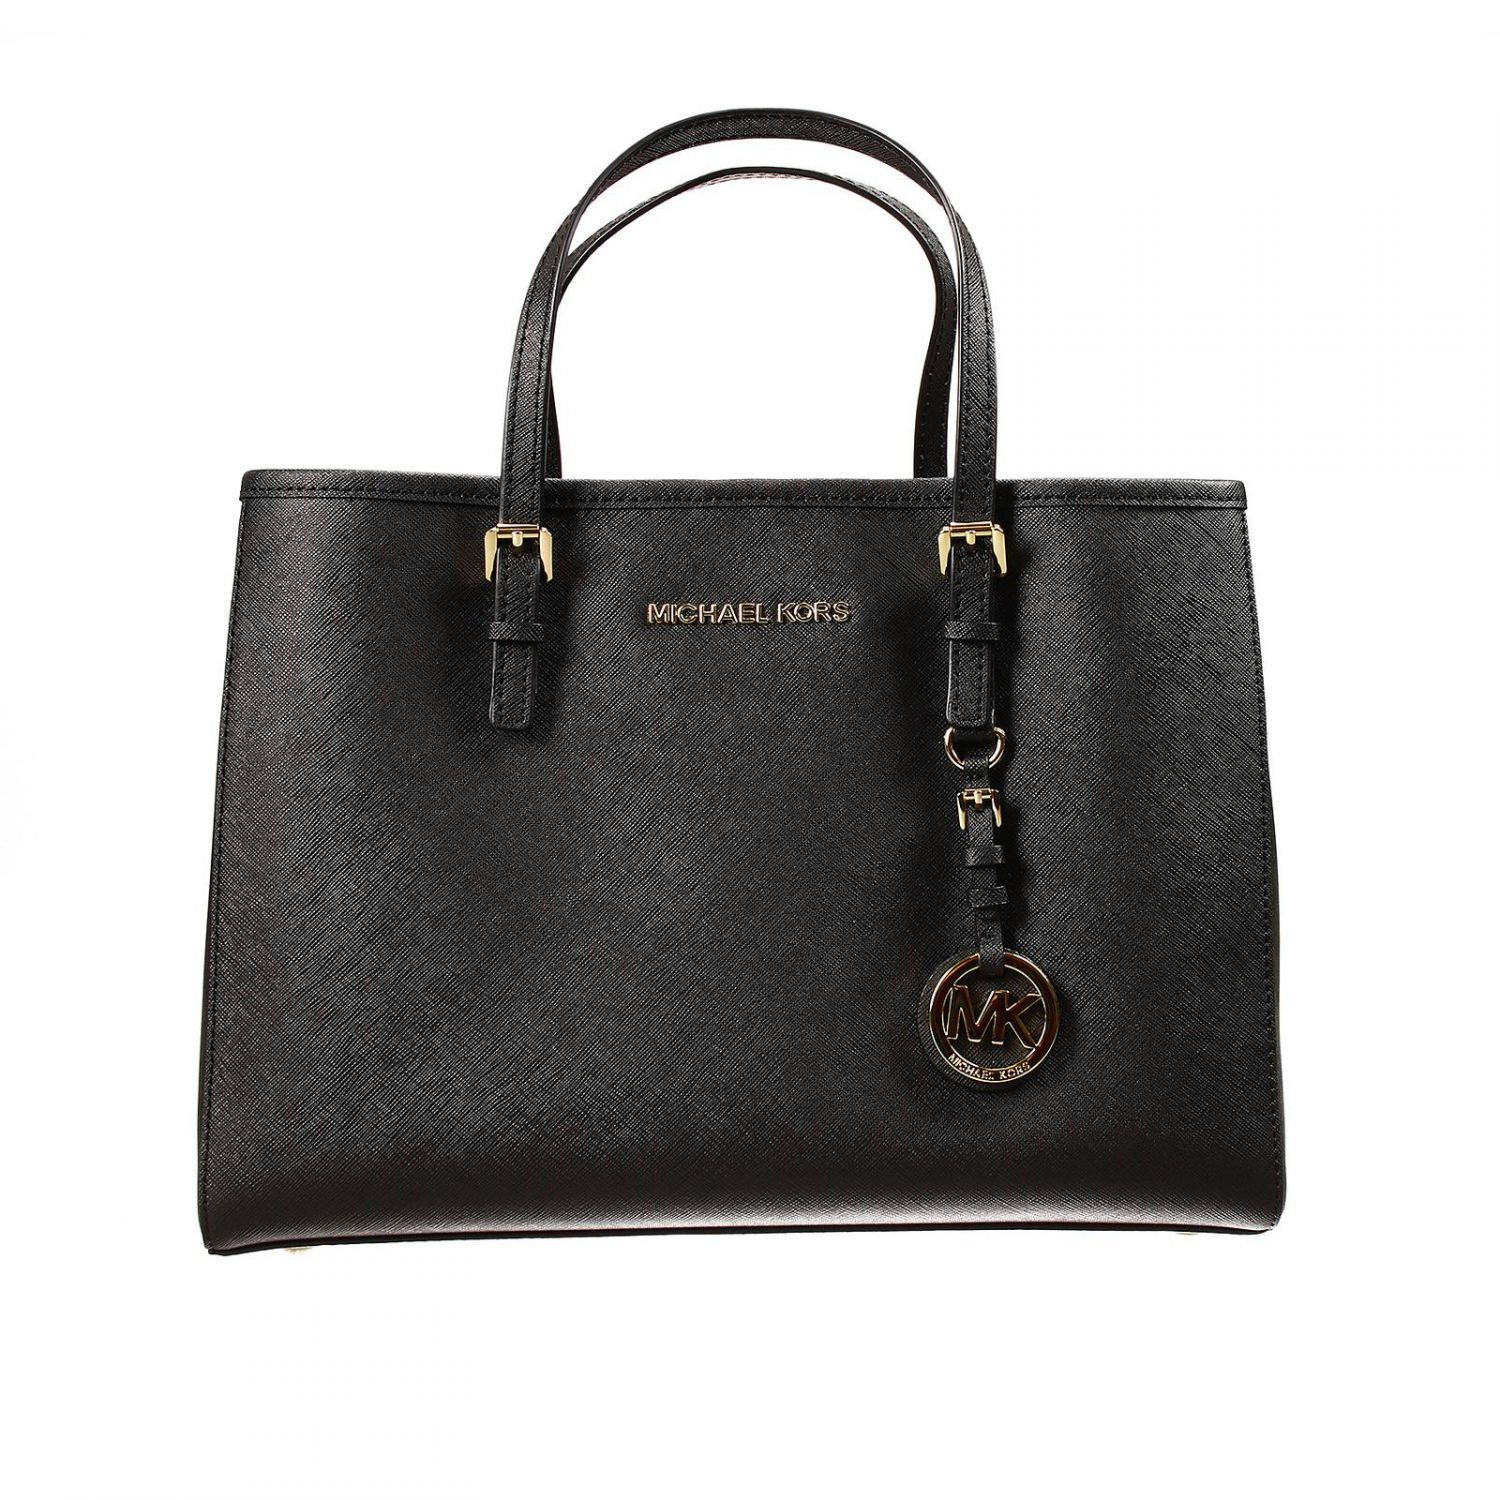 Lyst - Michael Kors Handbag Woman in Black